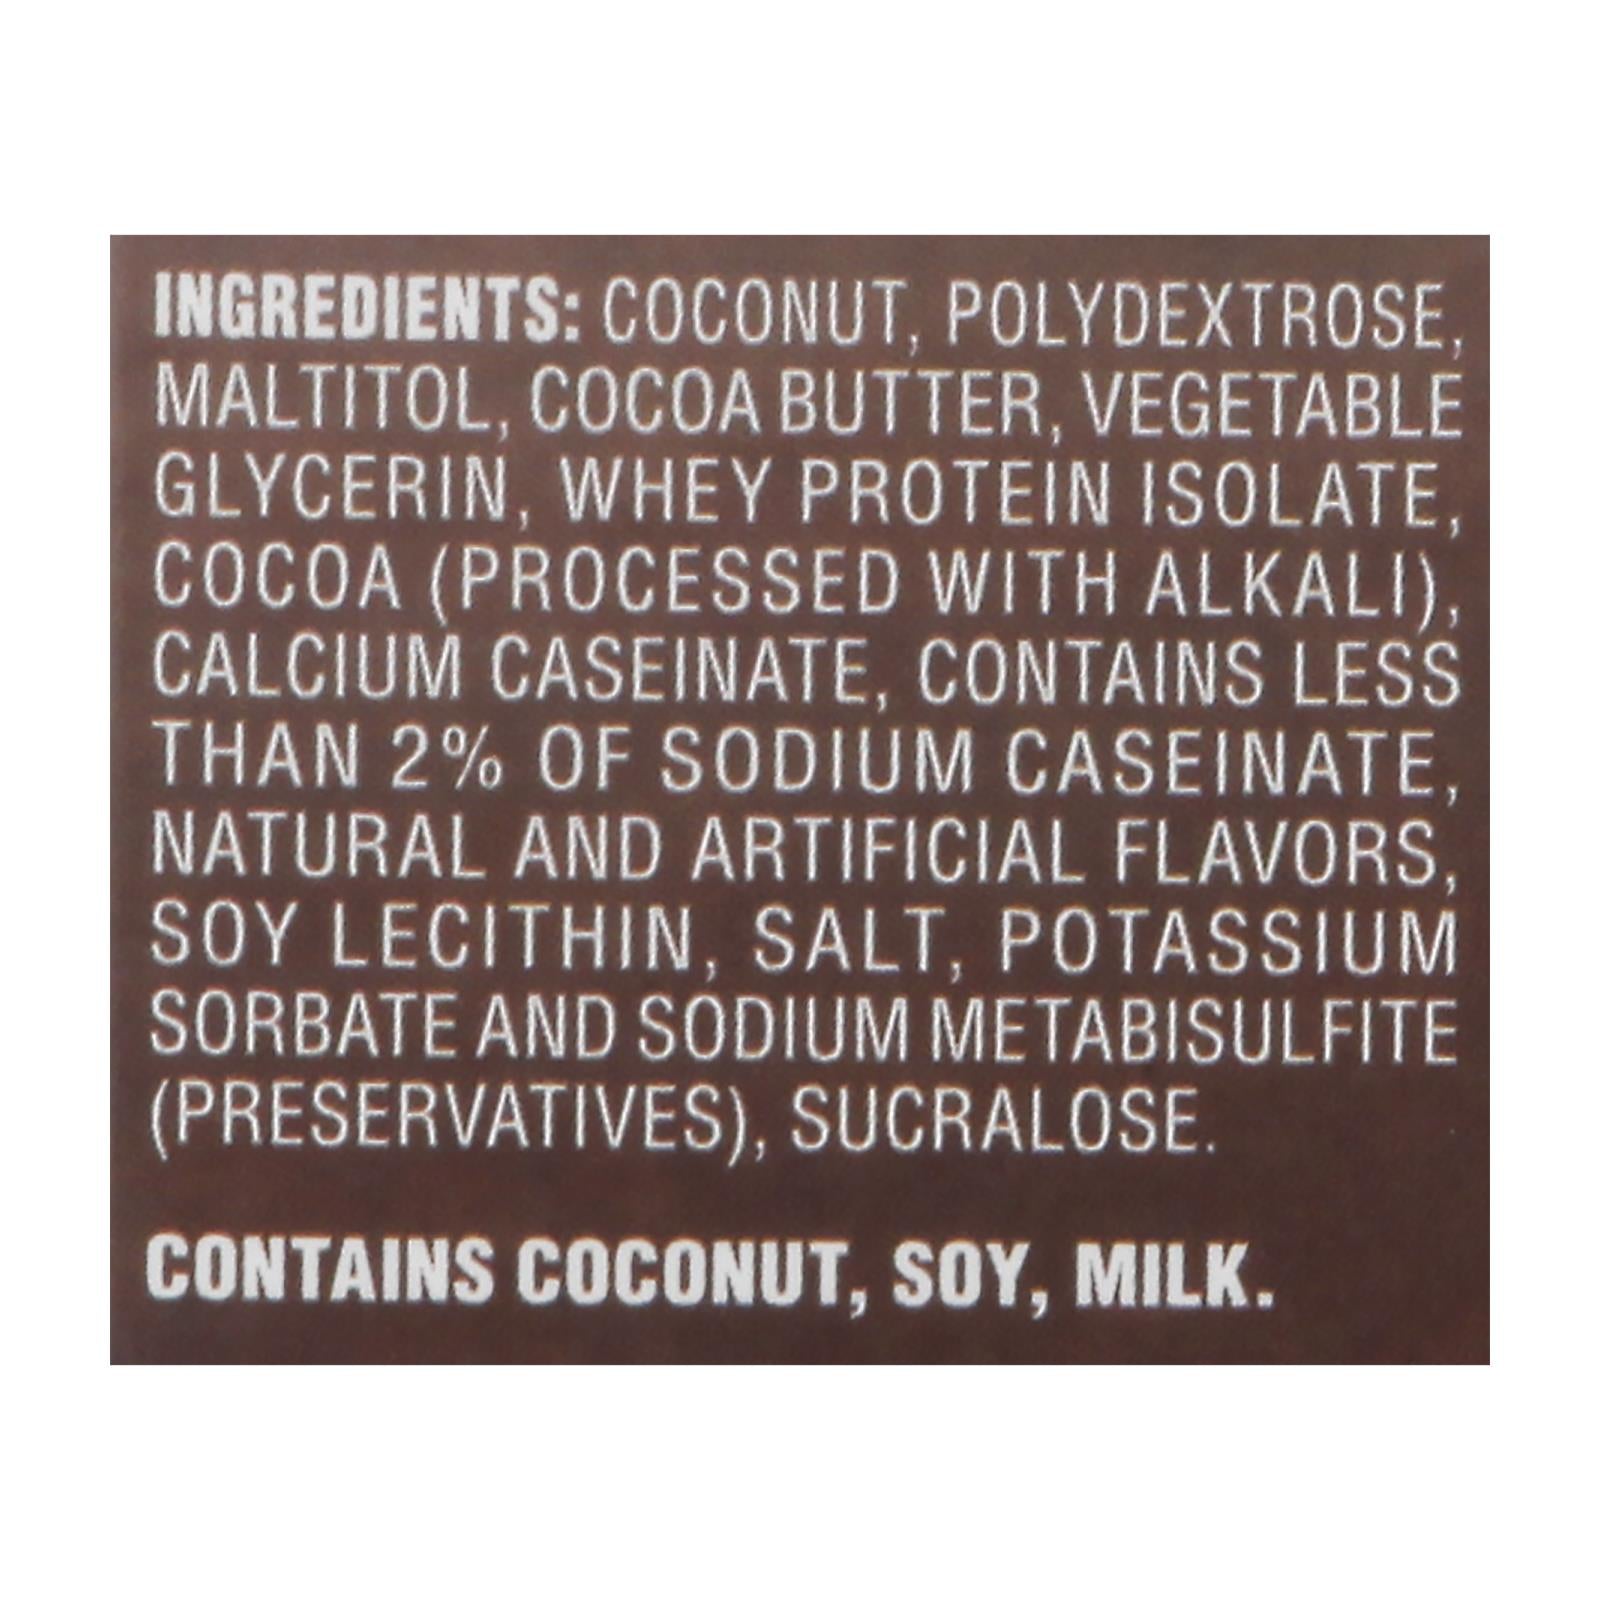 Atkins, Atkins Endulge Chocolate Coconut Bar - 5/1.4 oz